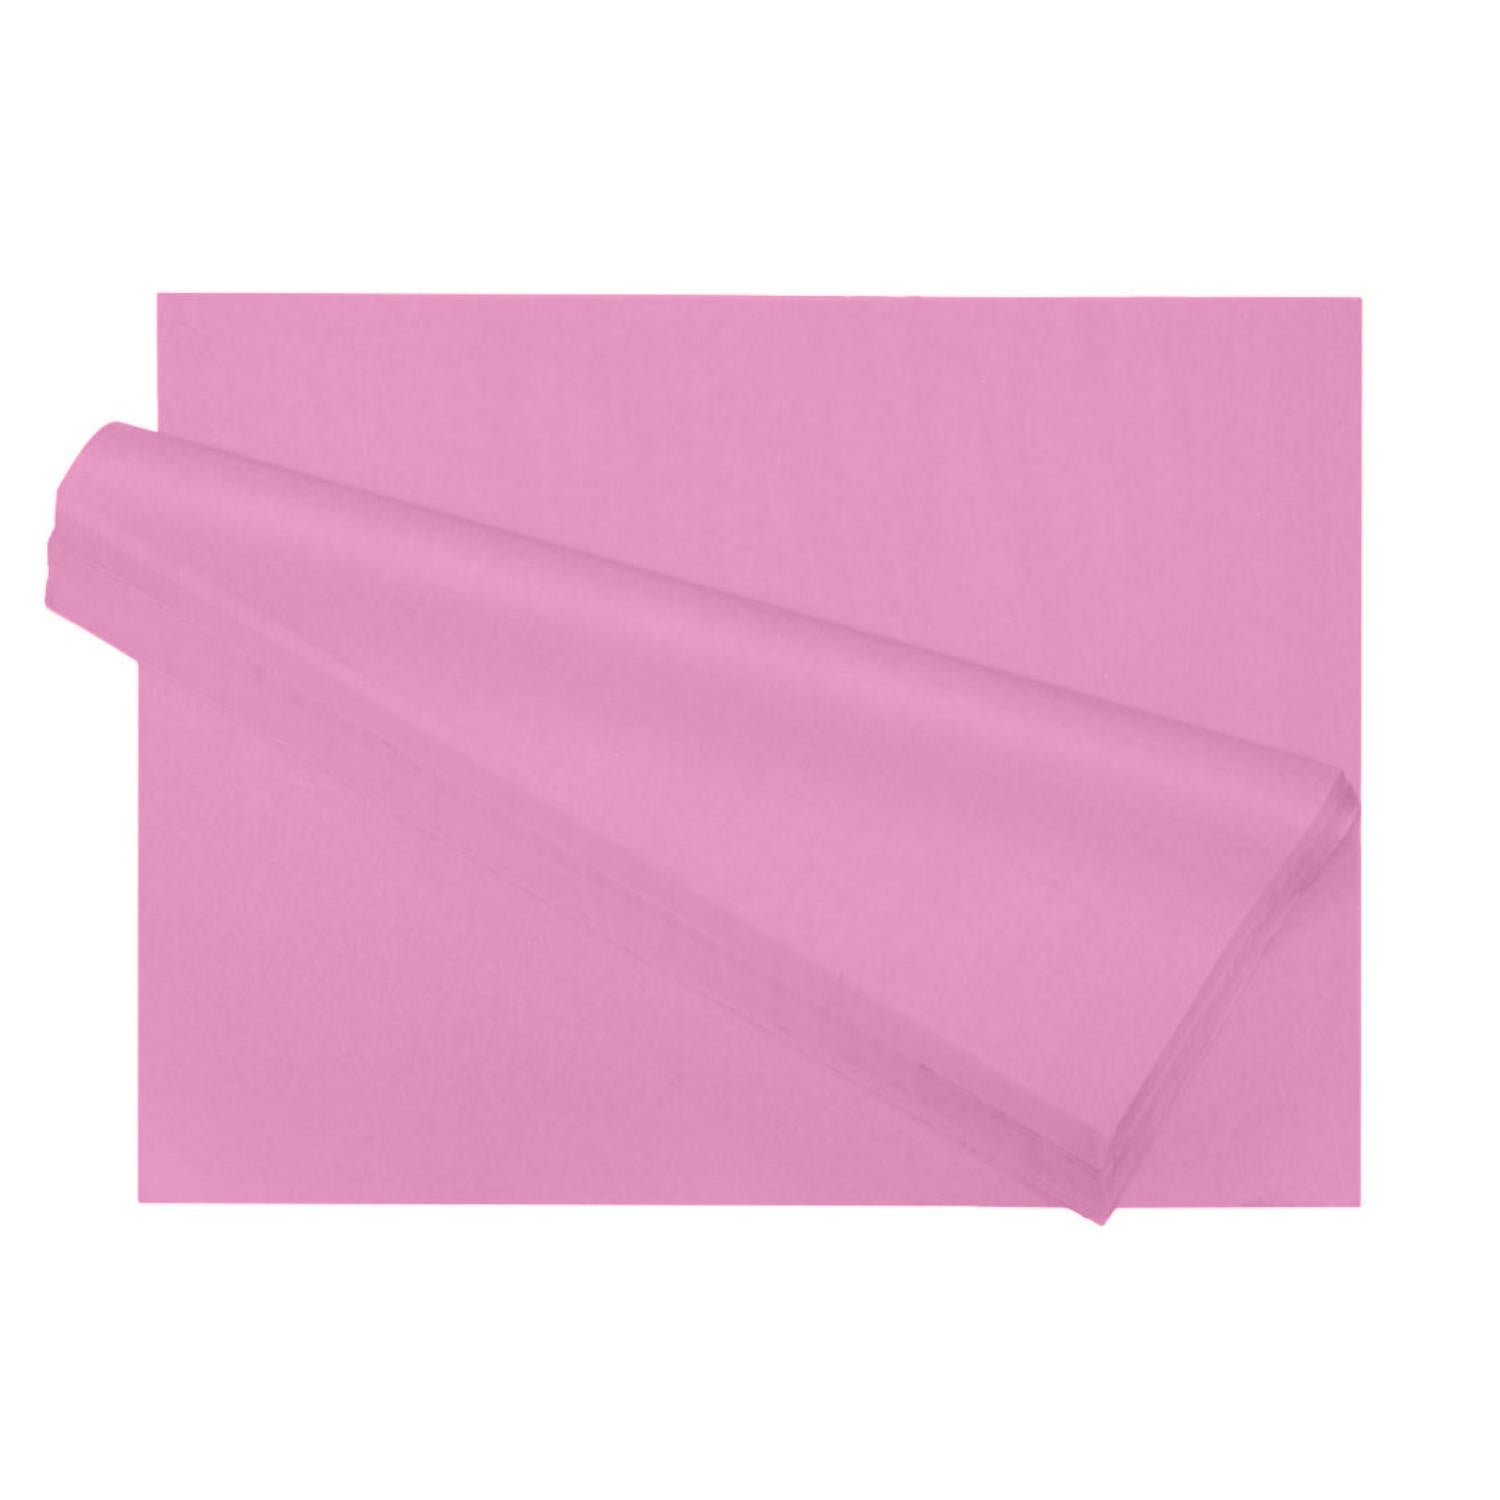 Light Brown Tissue Paper Bulk Large Sheets,10 sheets 20X26 Acid